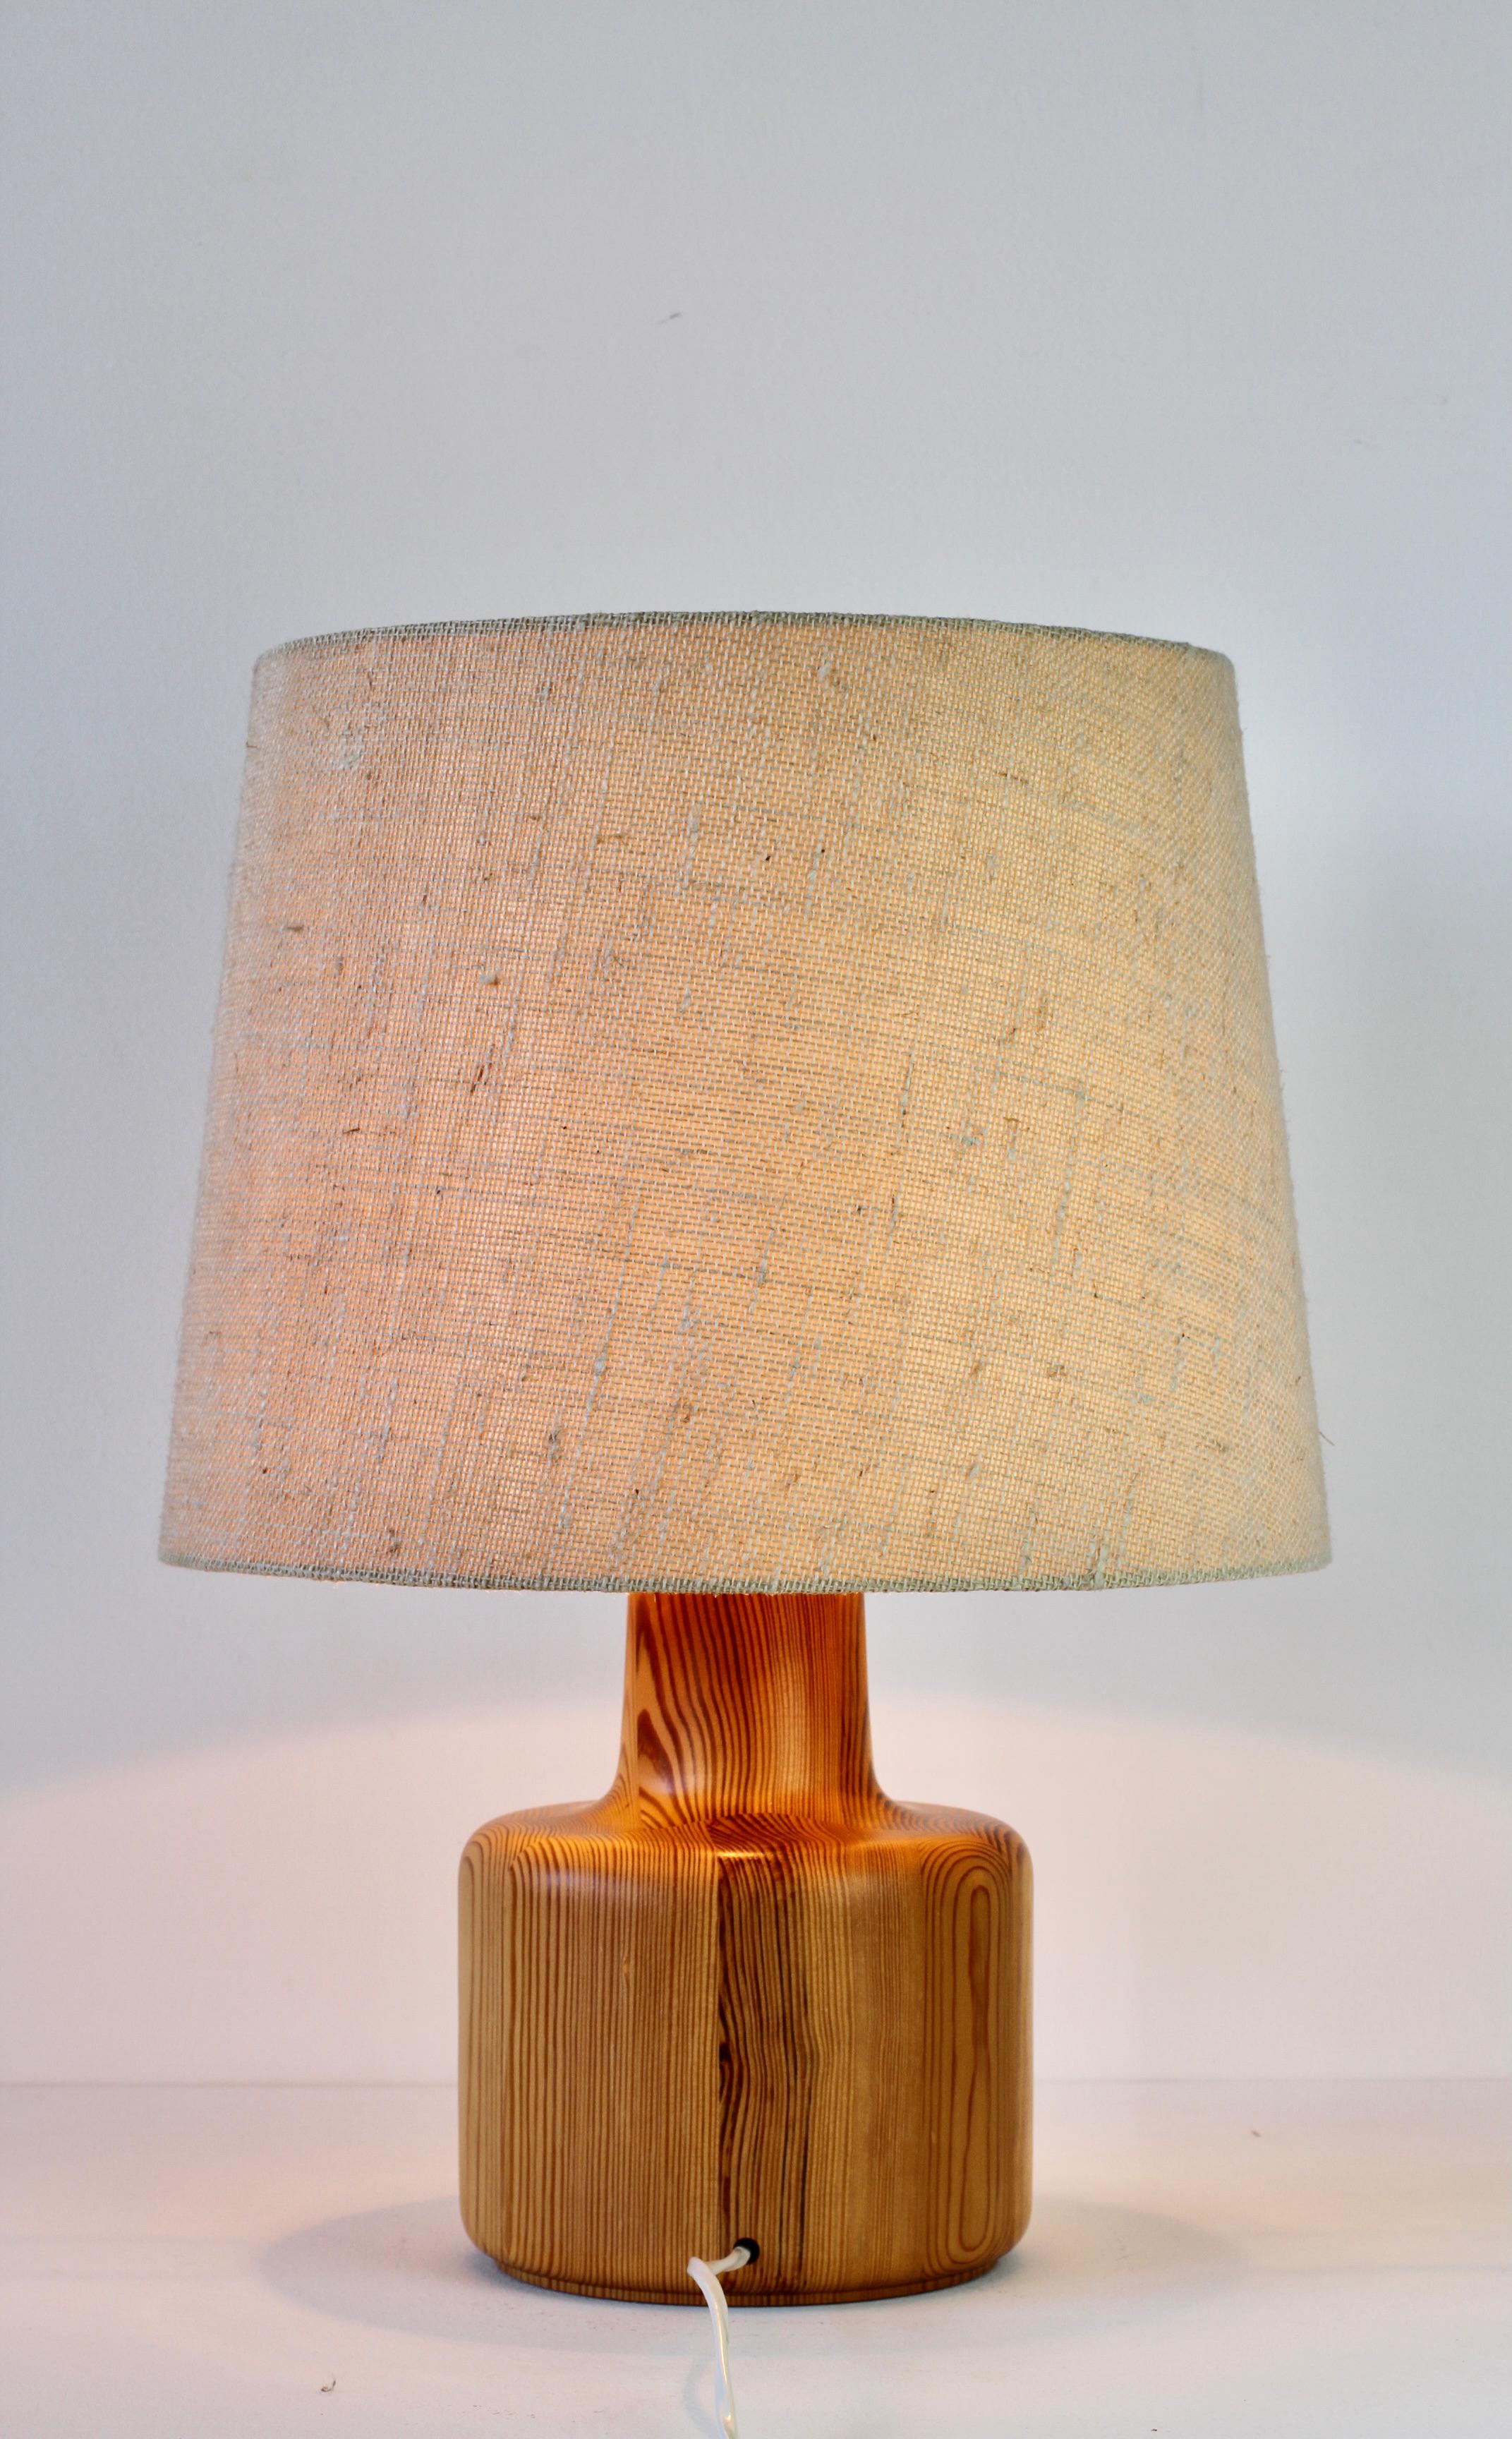 1970s Large Scandinavian Style Pine Wood Table Light Lamp Original Fabric Shade 5